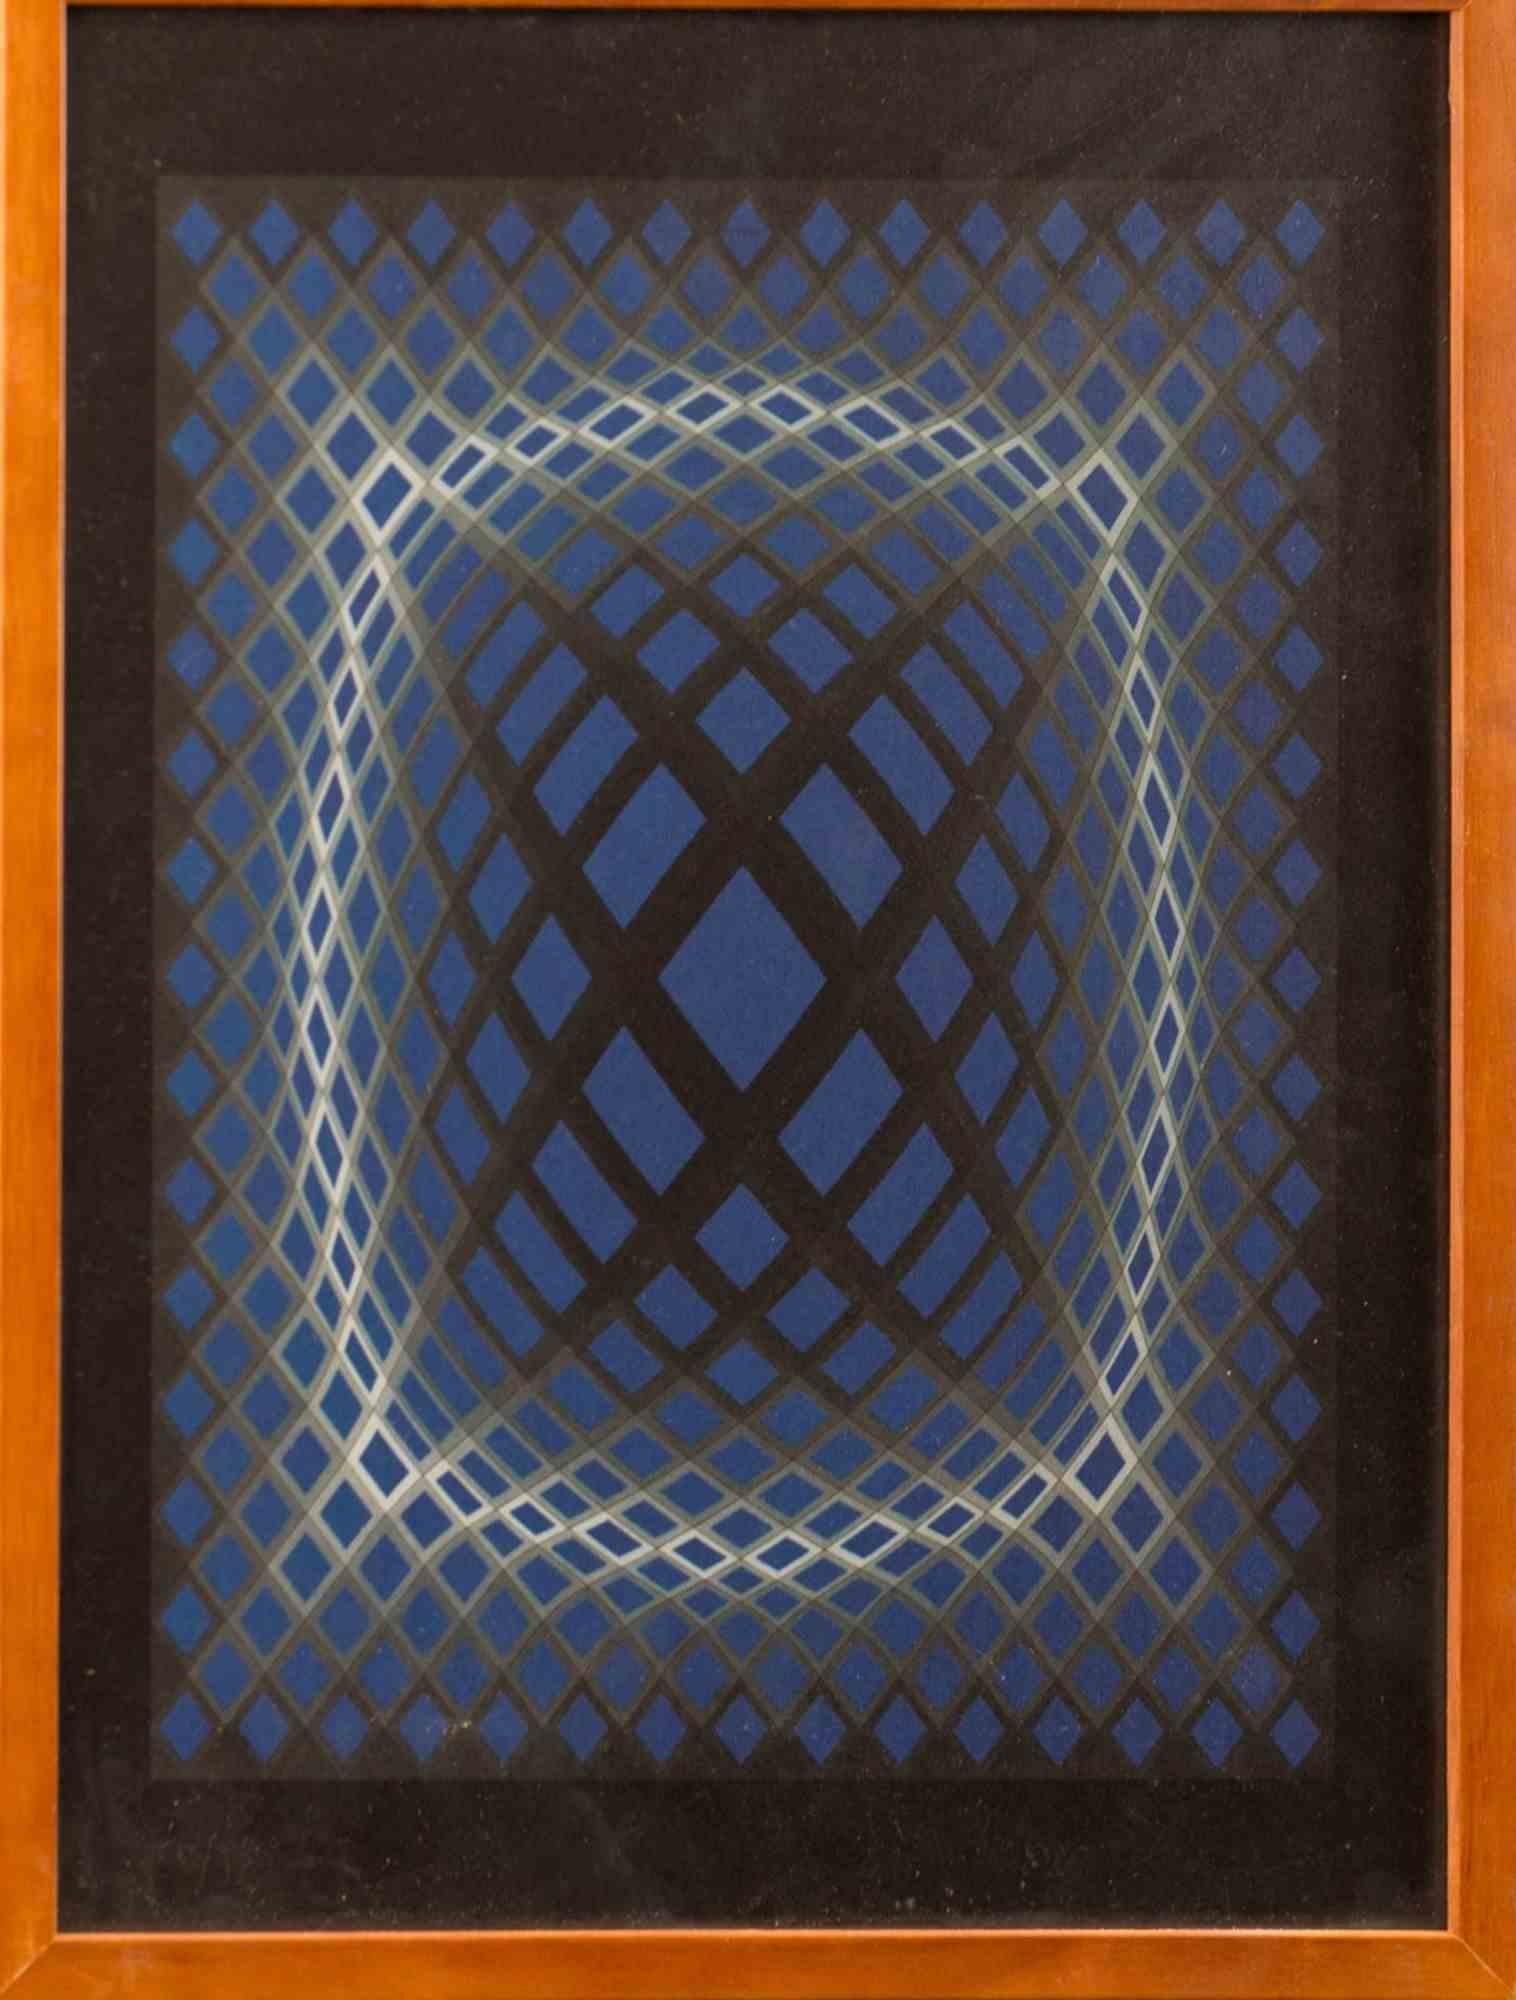 Lattice - Srigraphie de V. Vasarely - annes 1980 - Print de Victor Vasarely